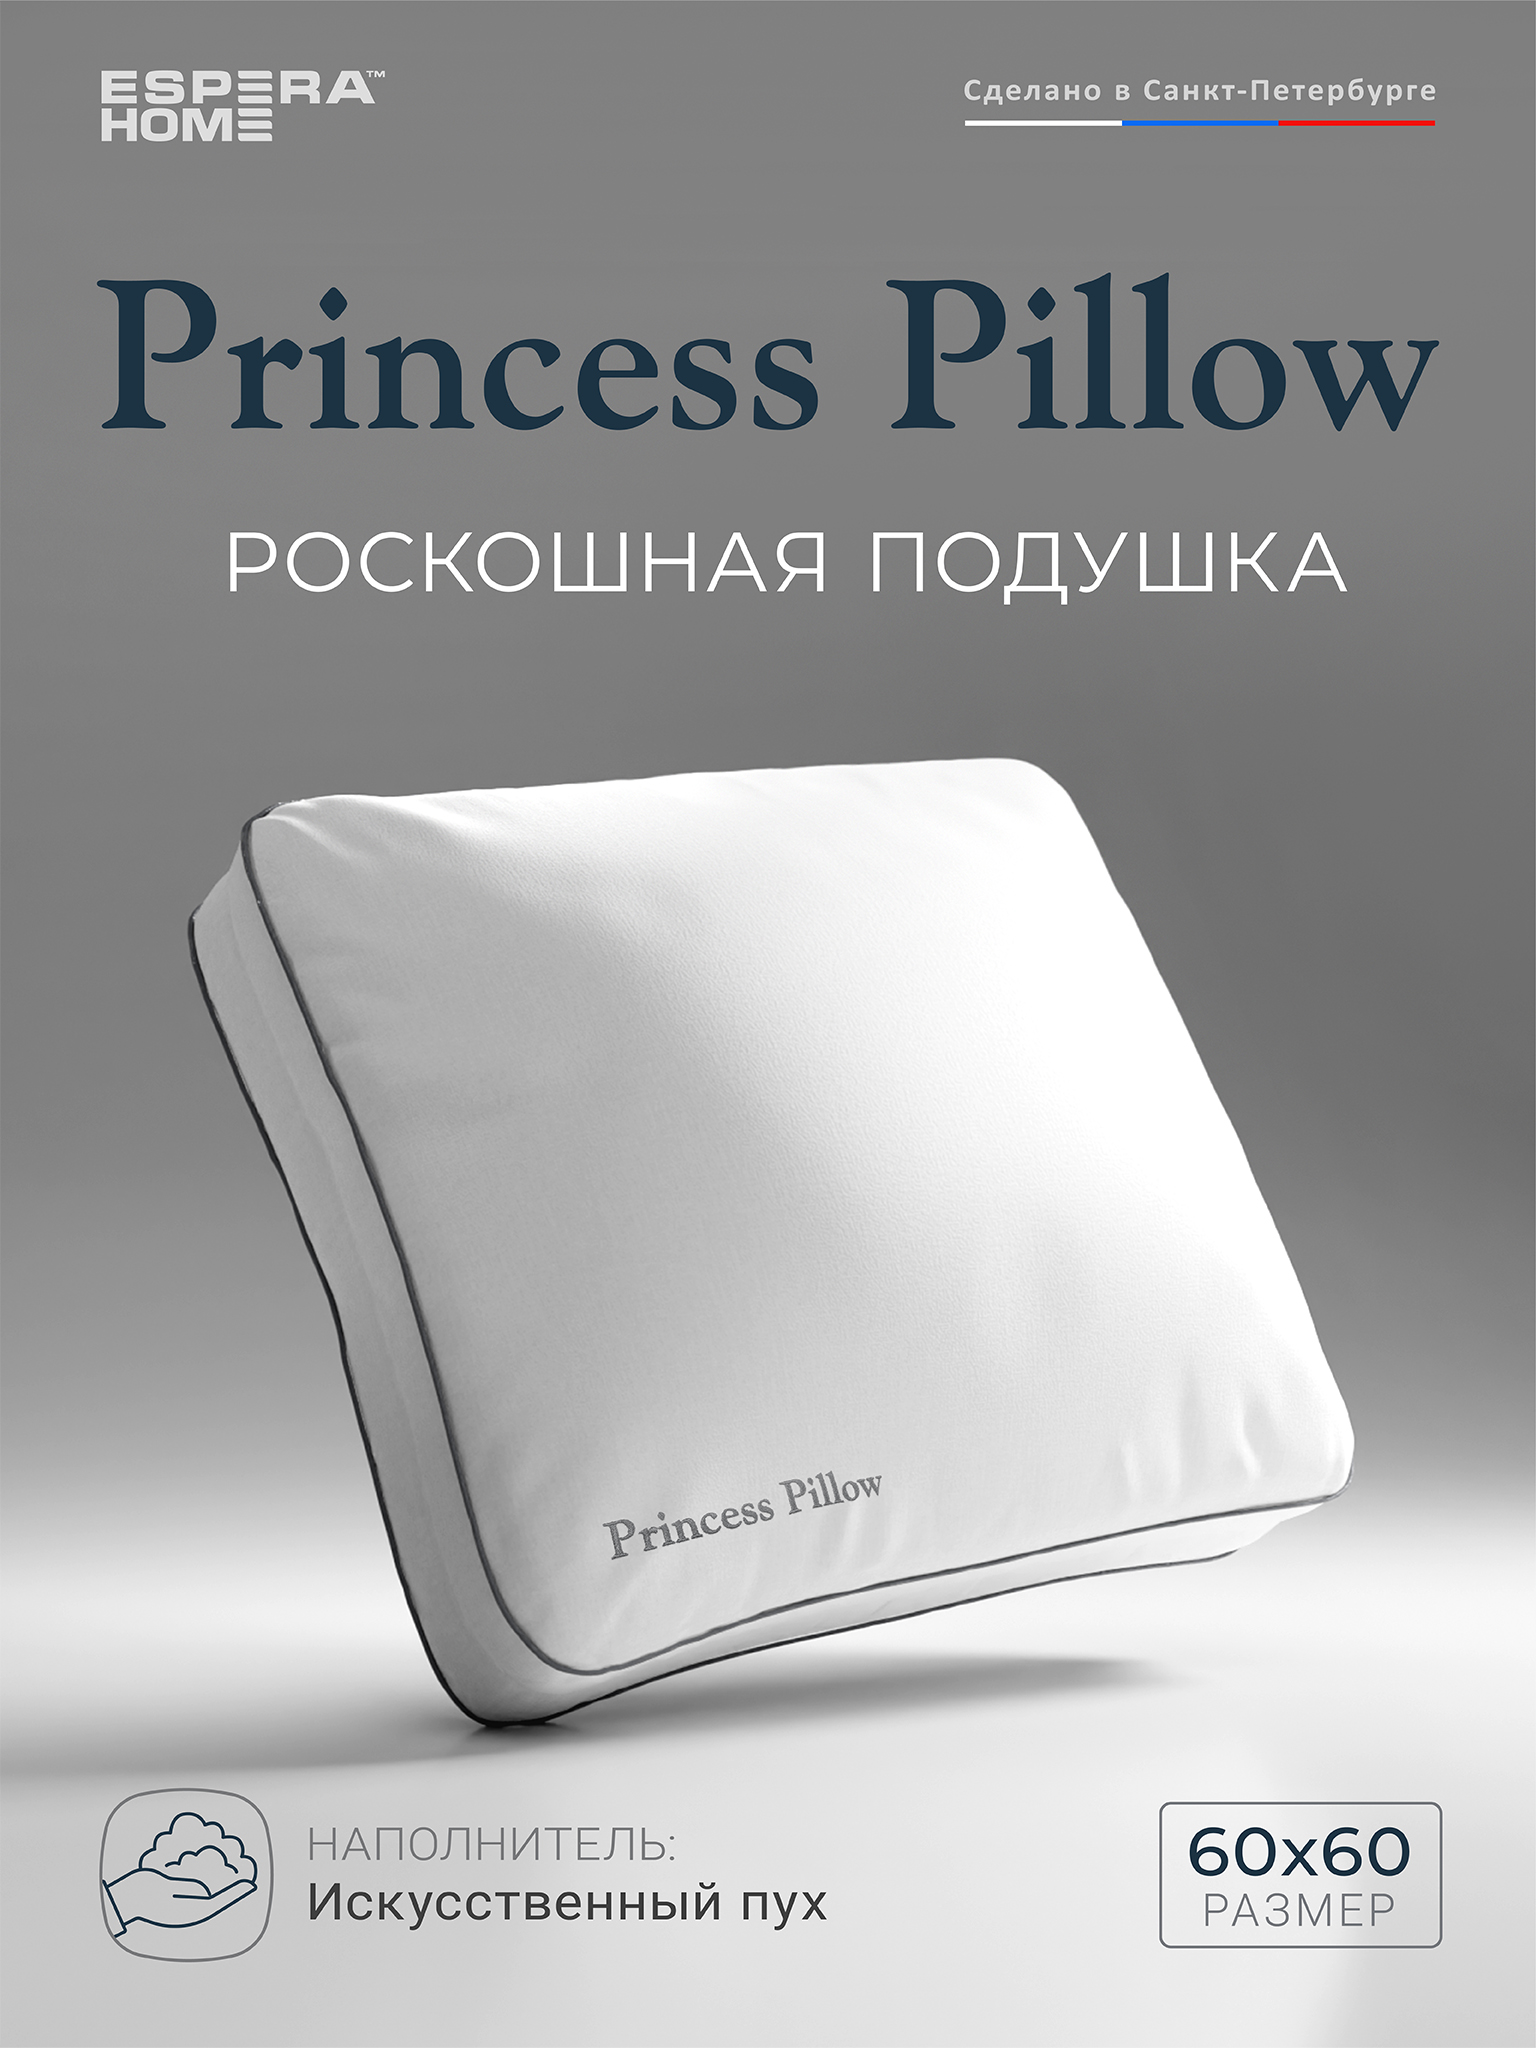 Подушка •  Princess Pillow / Принцесс Пилоу •  2 Block